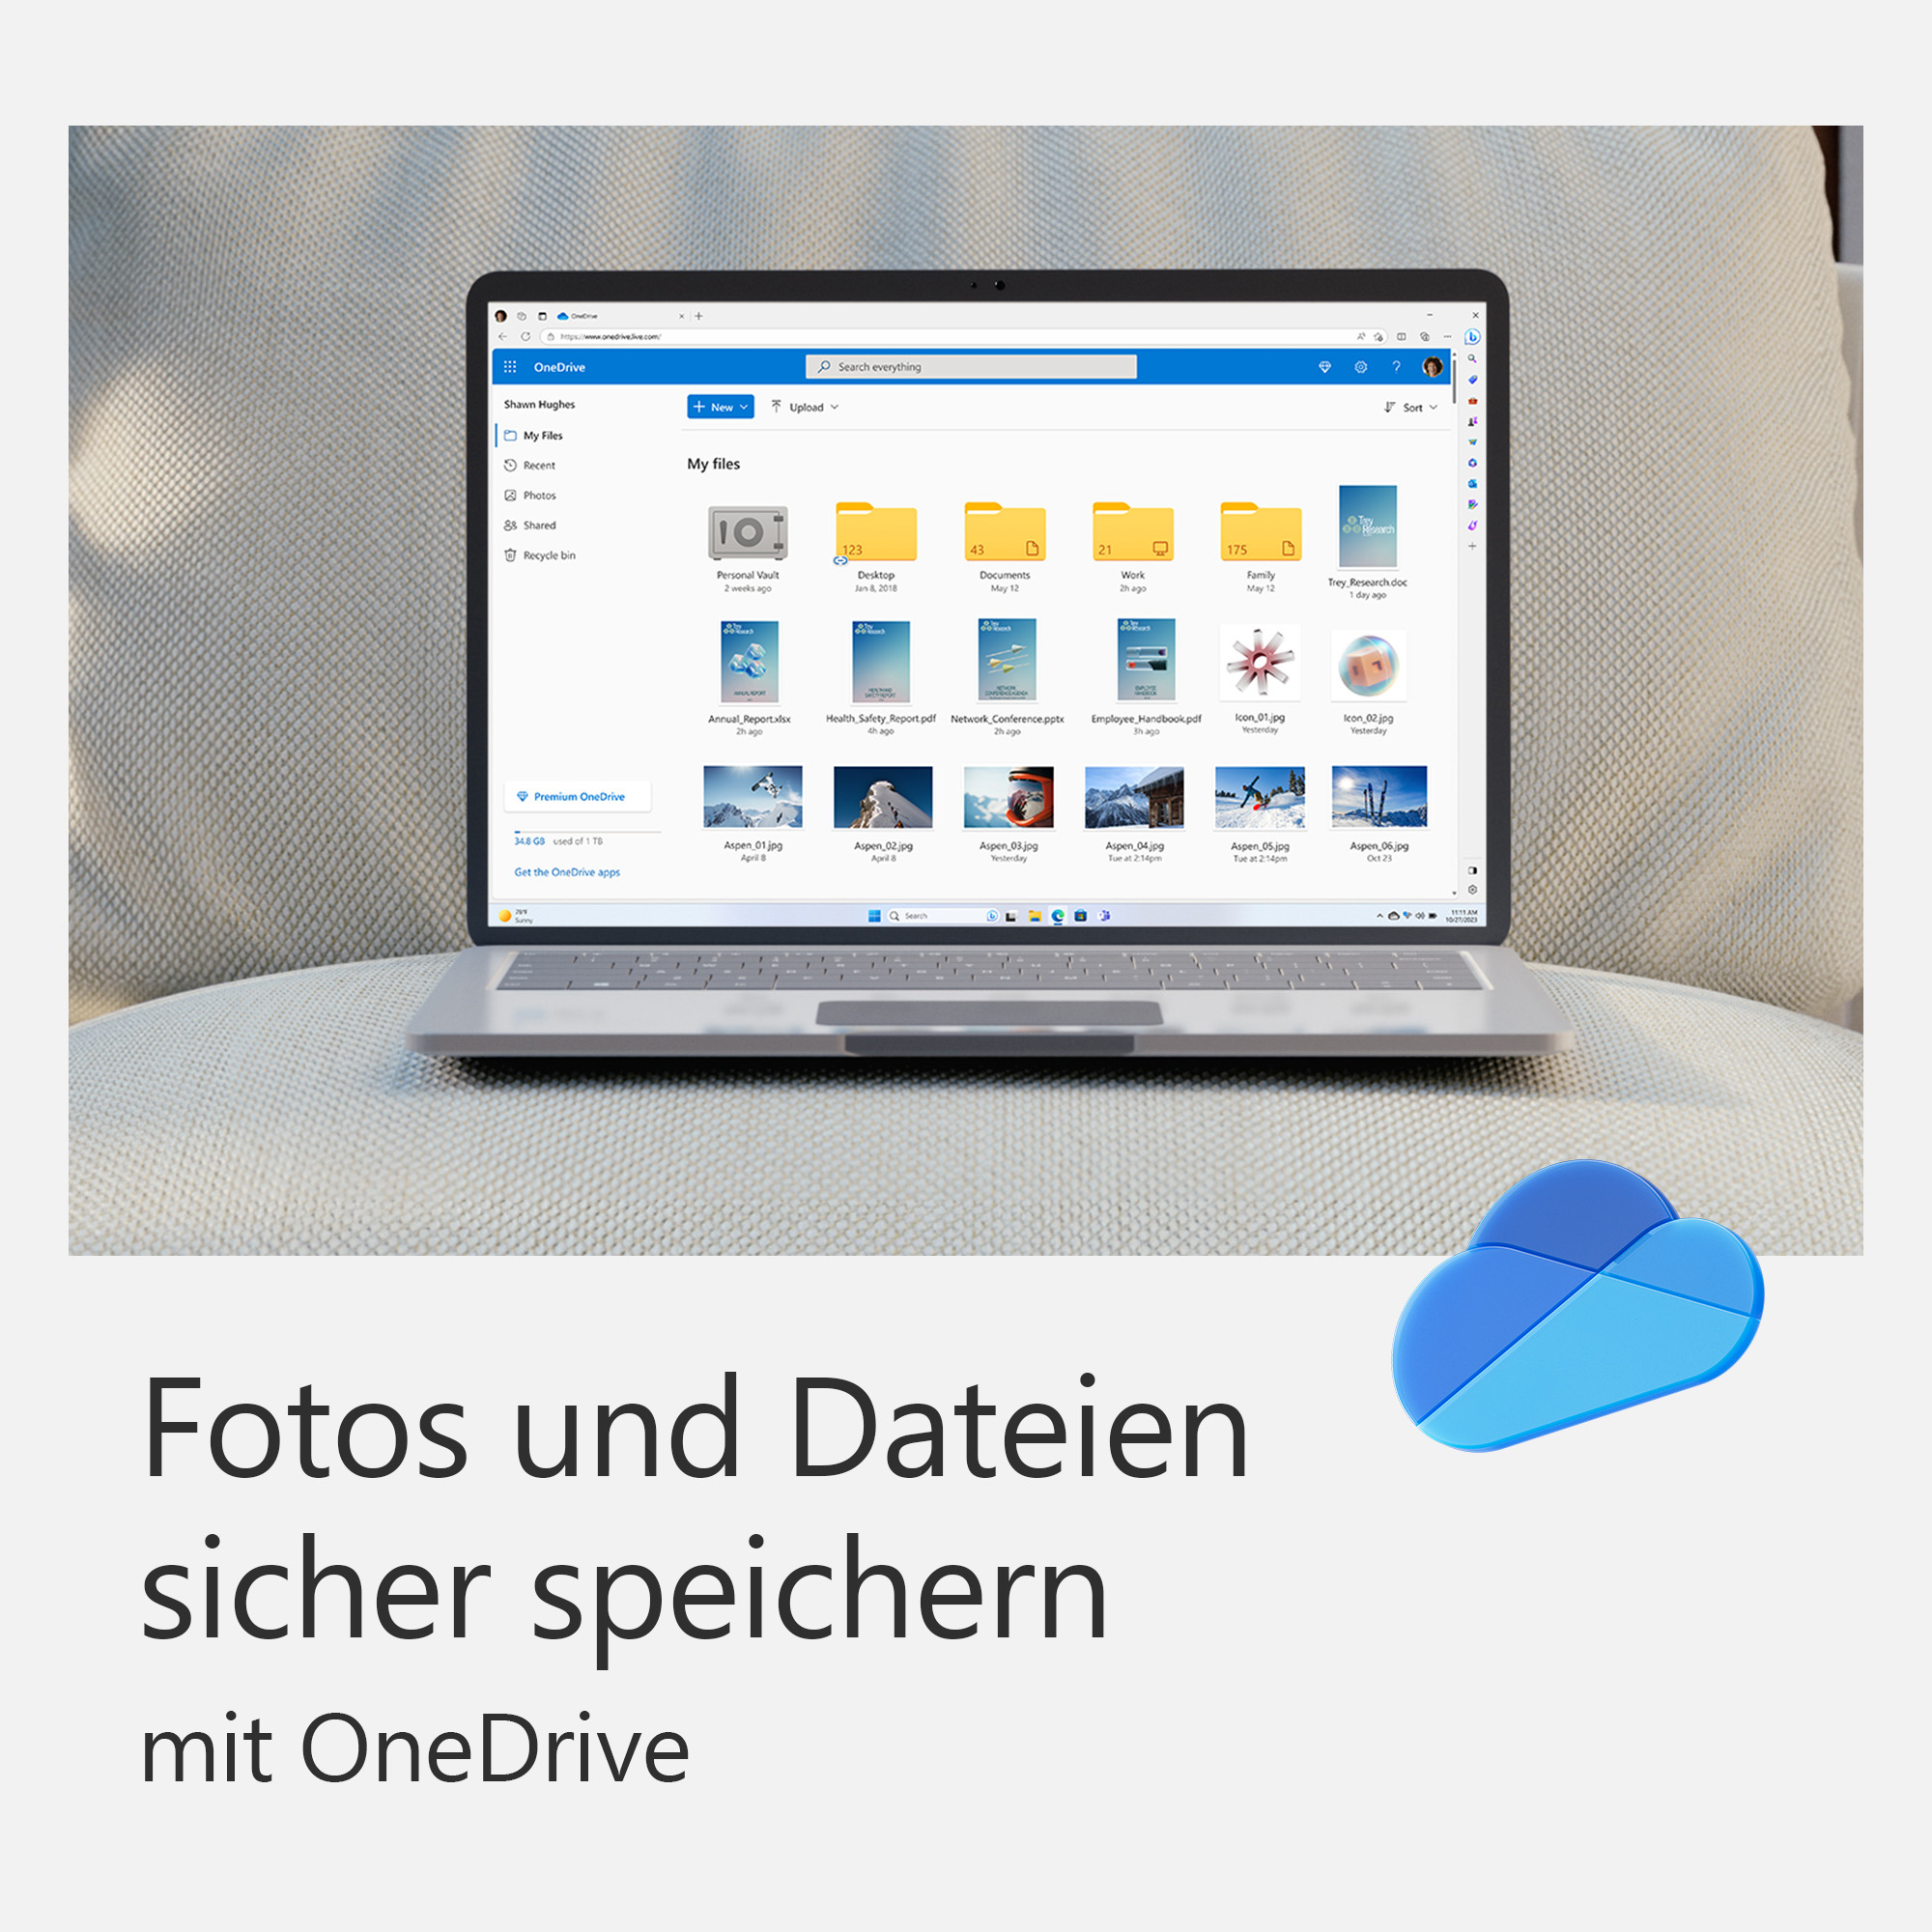 Microsoft 365 Single - PC/MAC - Deutsch